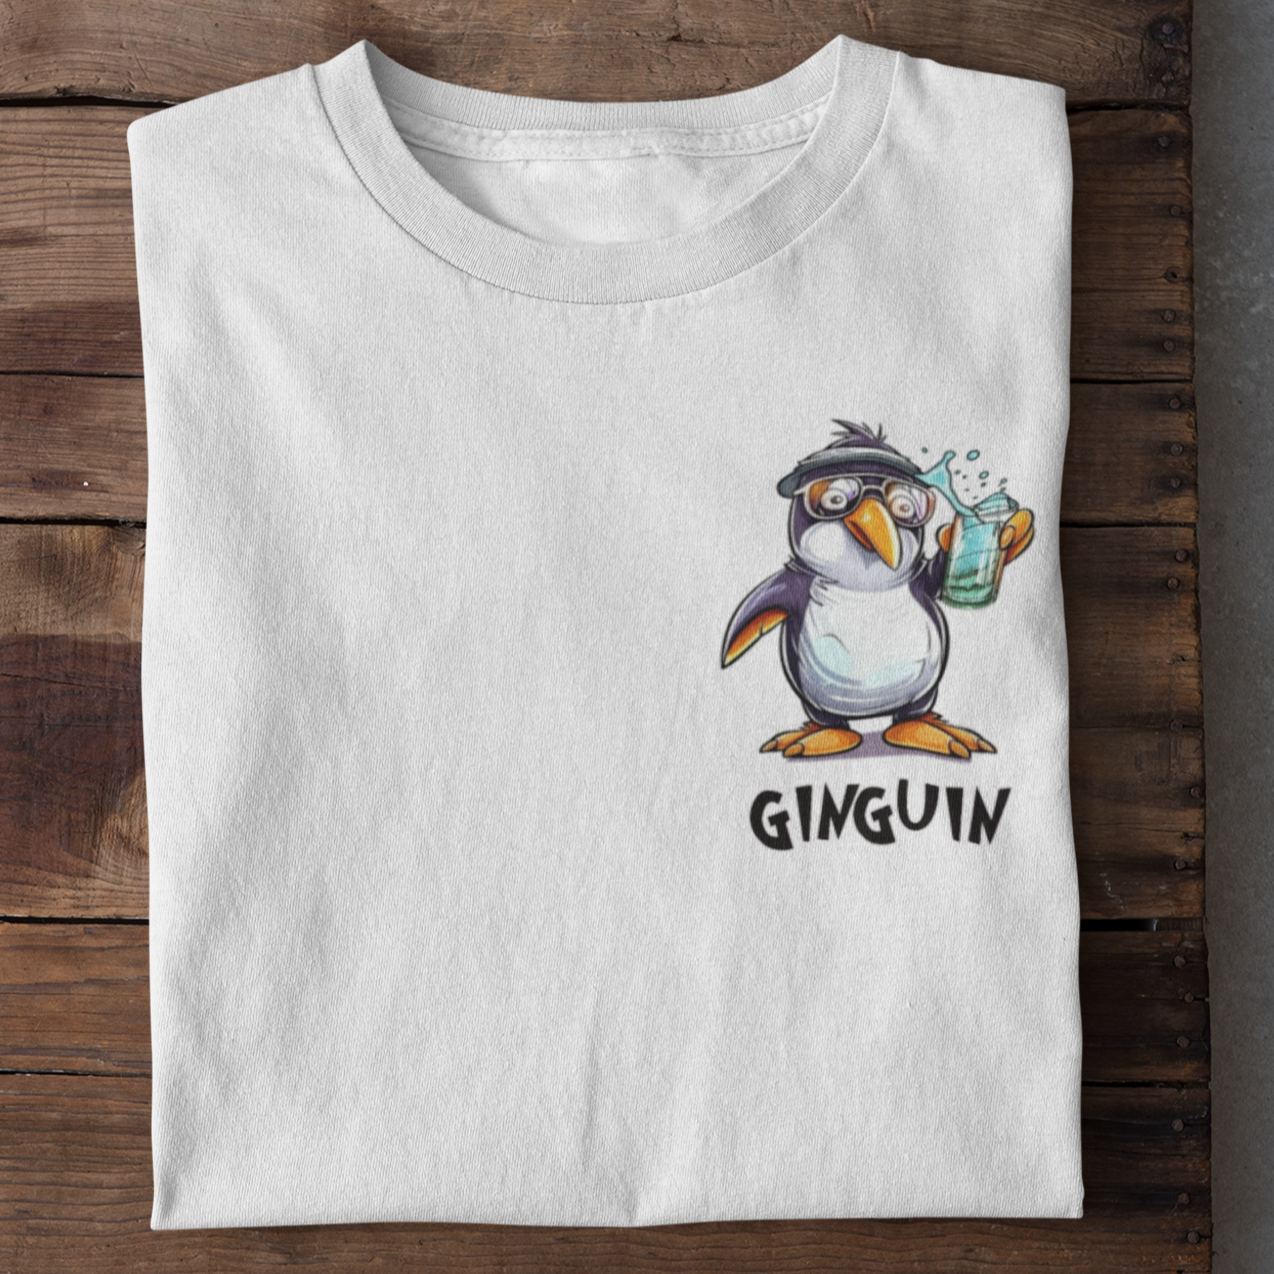 GINGUIN - Premium Shirt